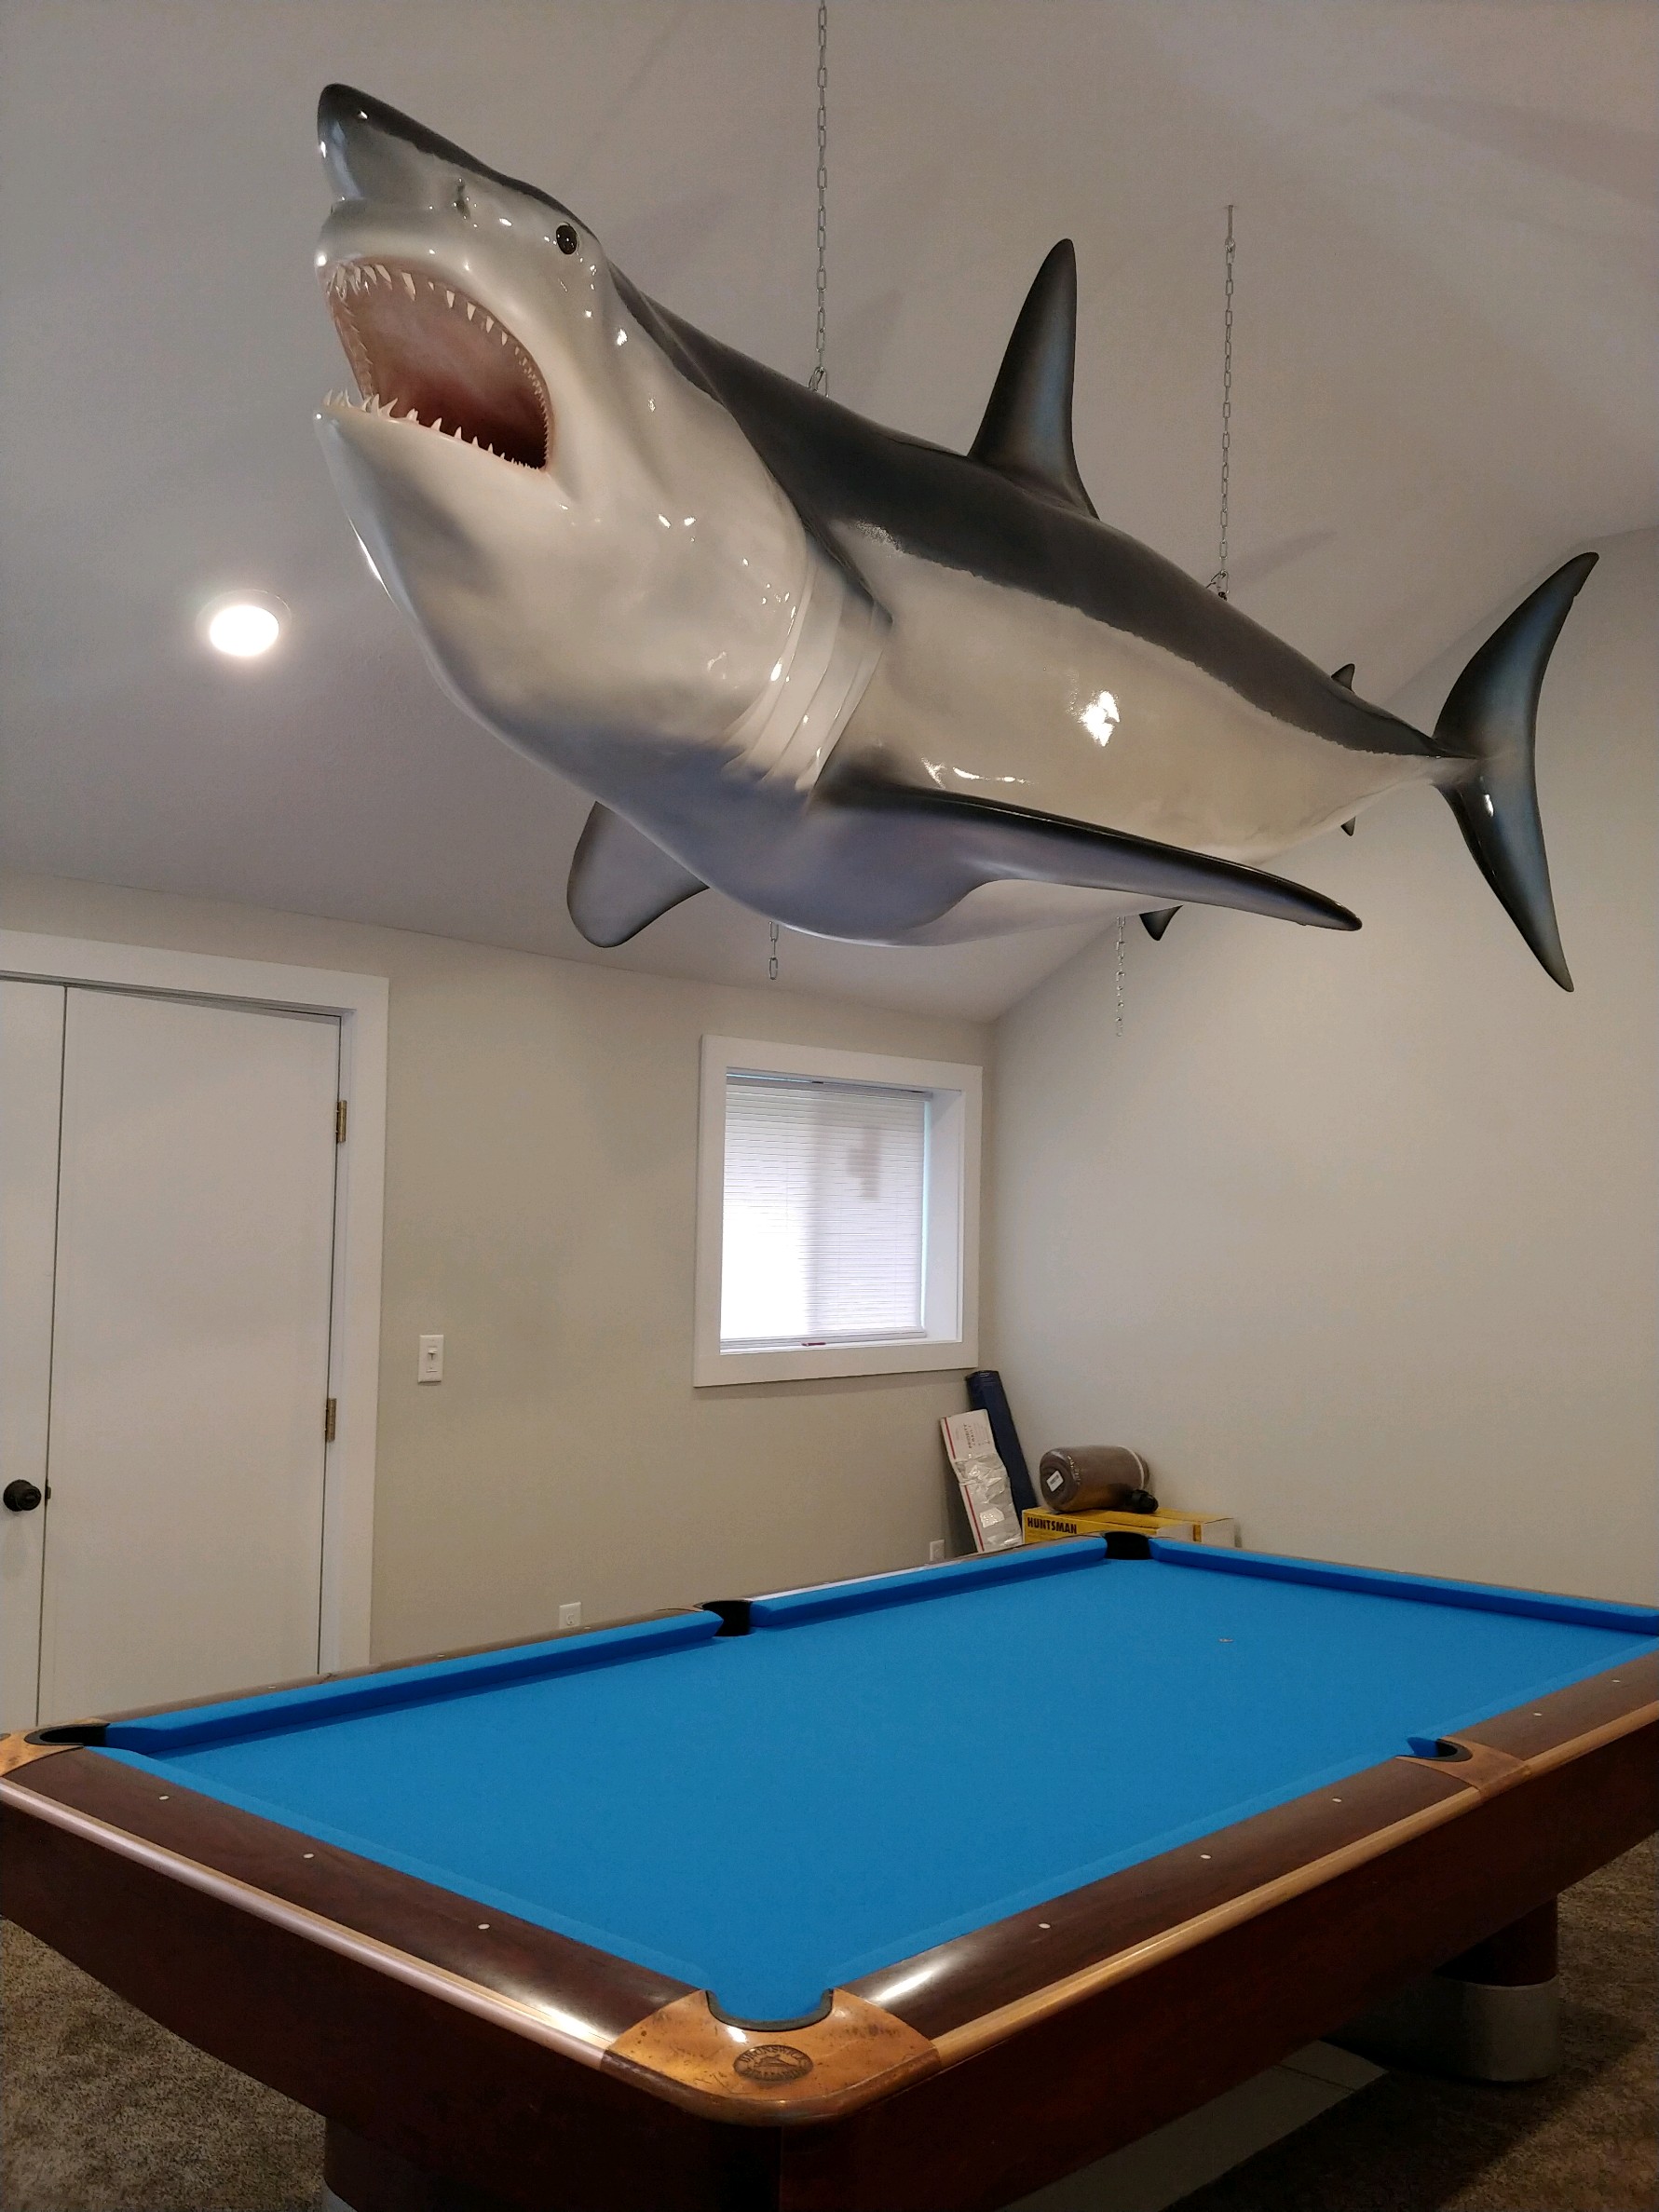 Mako Shark display